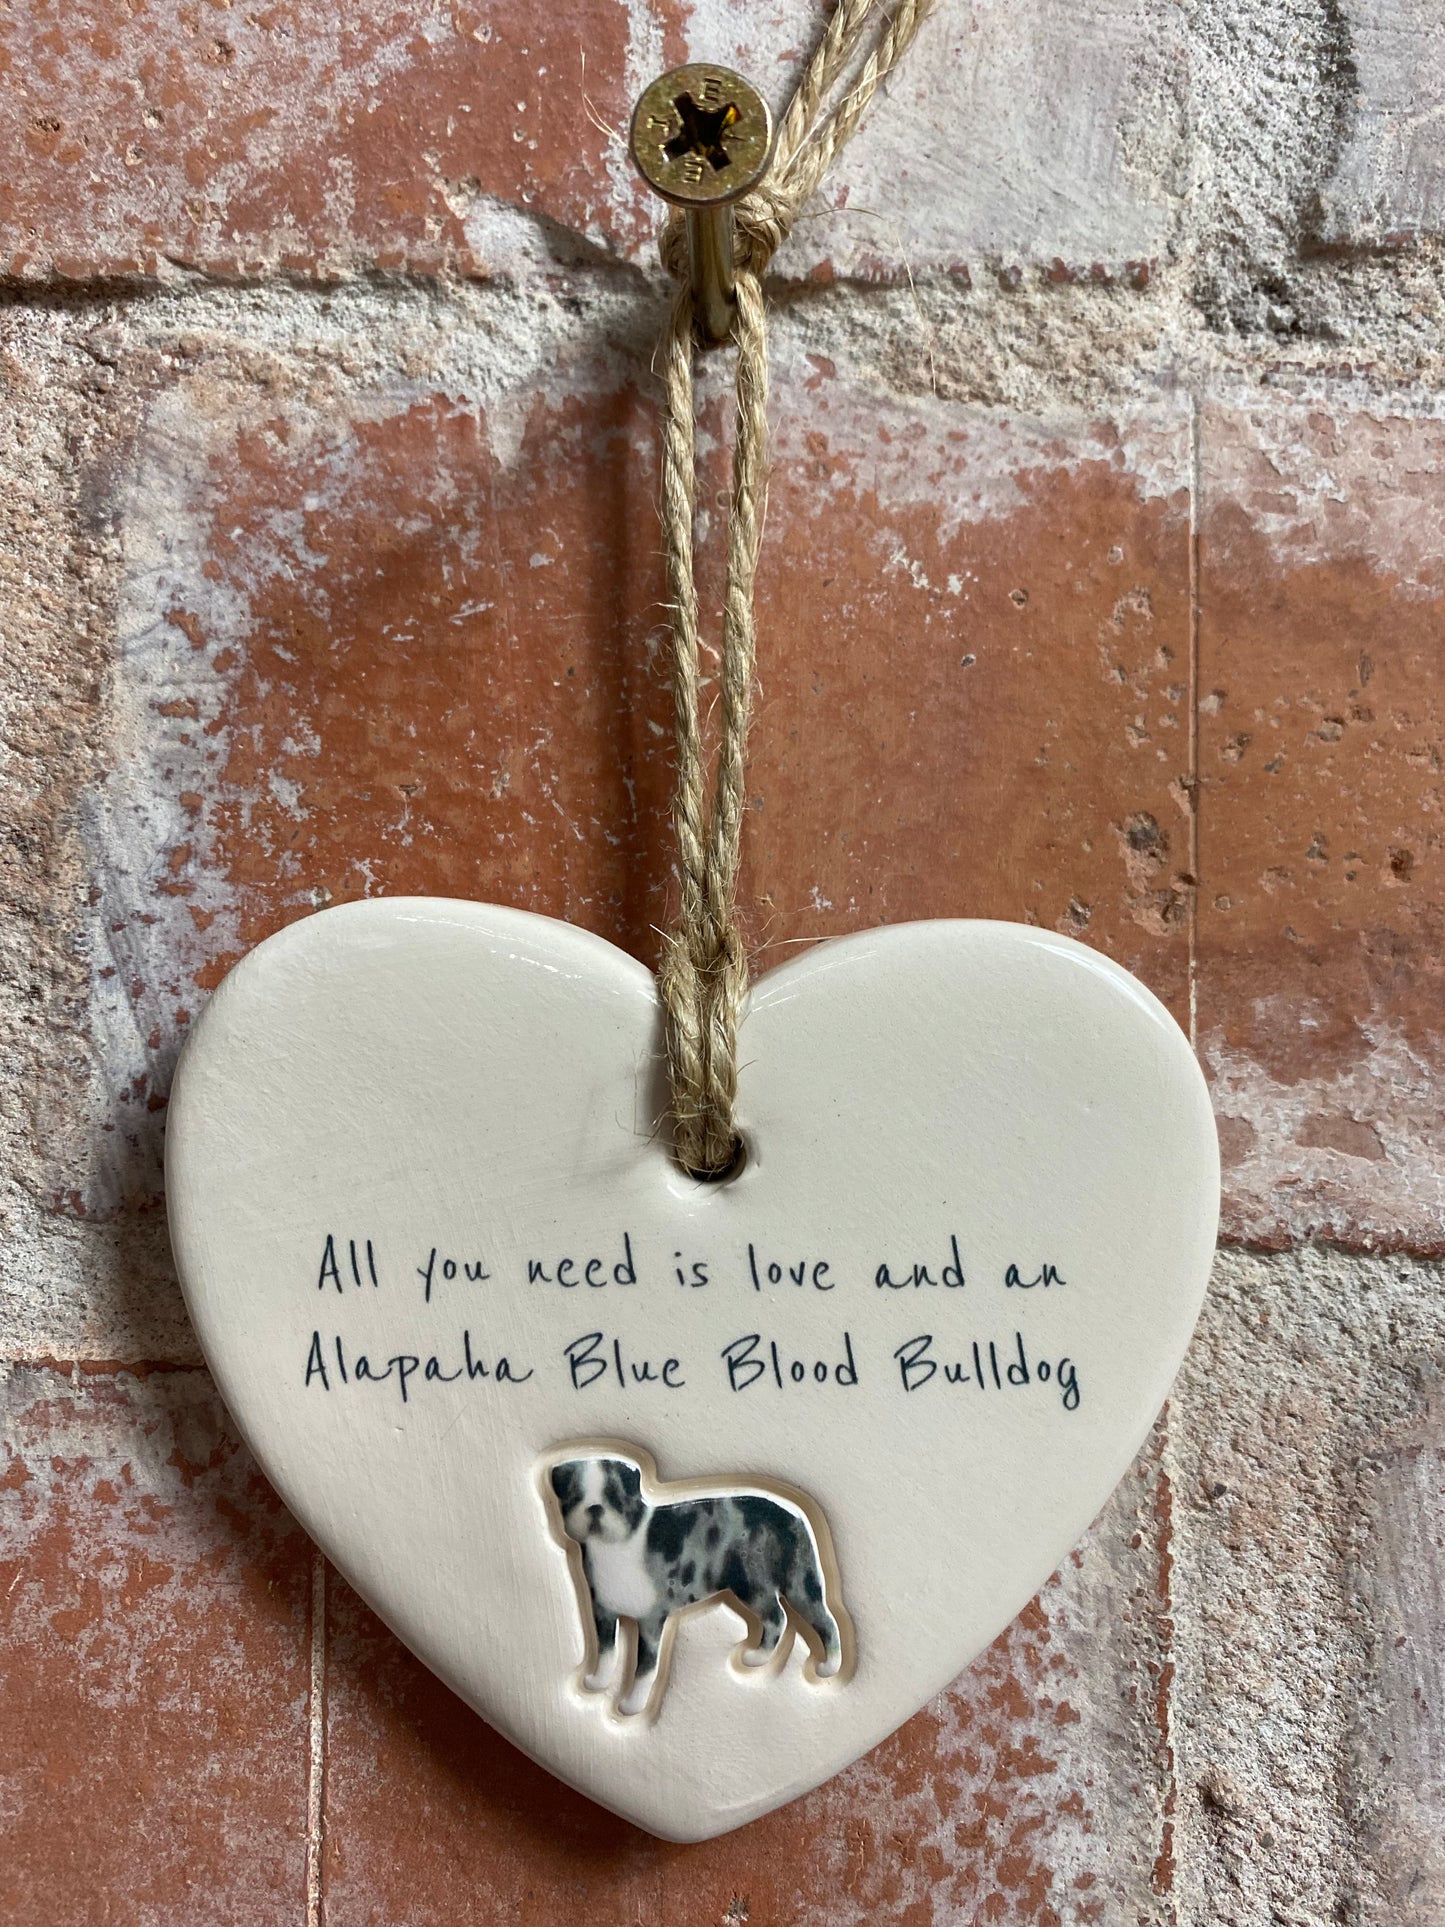 Alapaha Blue Blood Bulldog ceramic heart